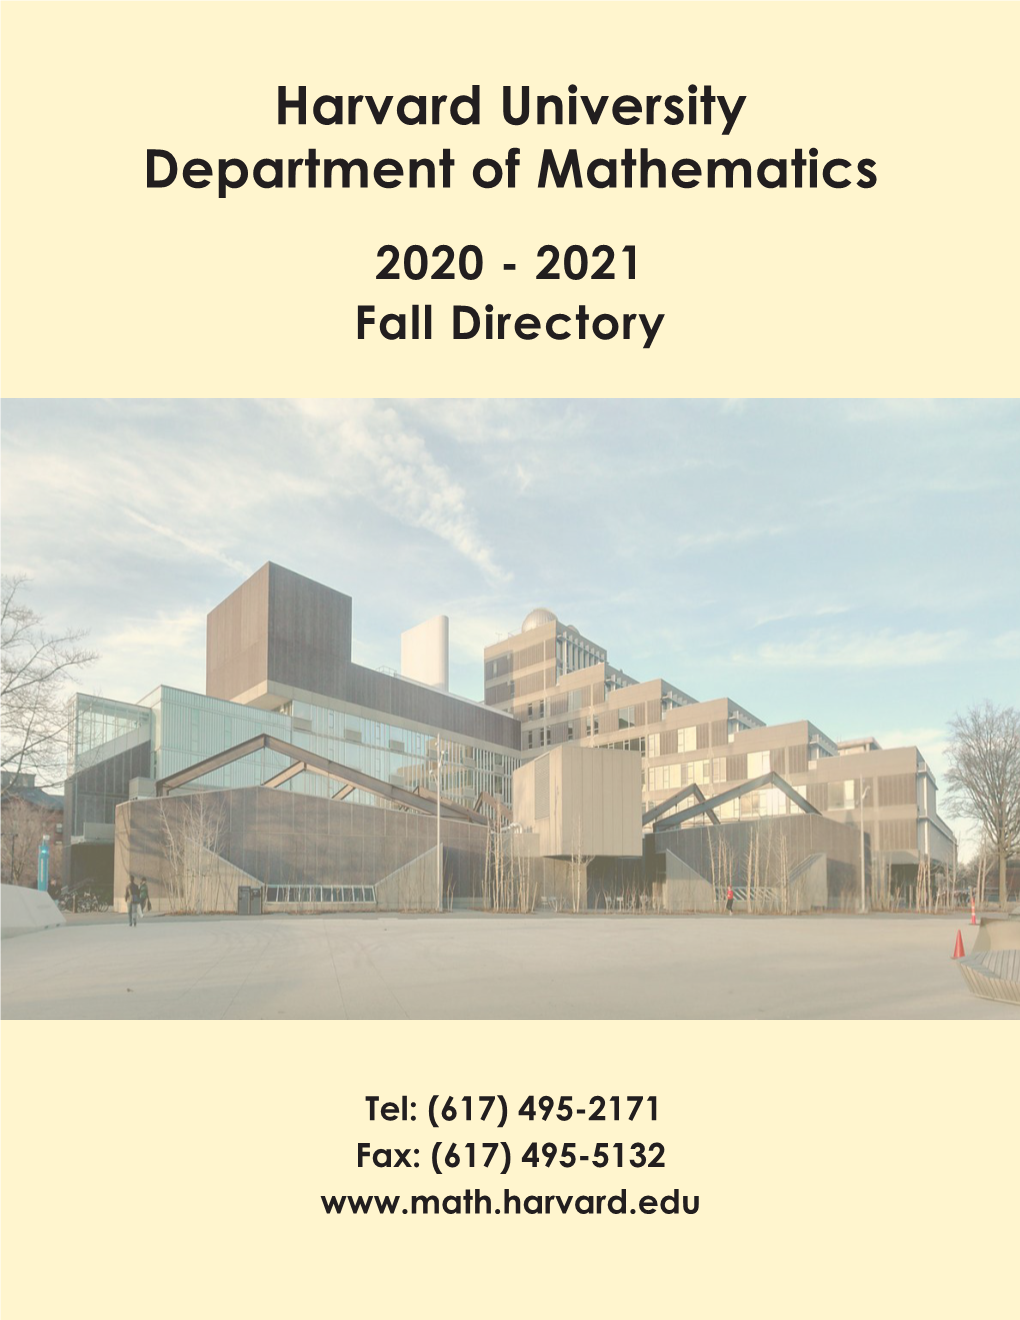 Harvard University Department of Mathematics 2020 - 2021 Fall Directory